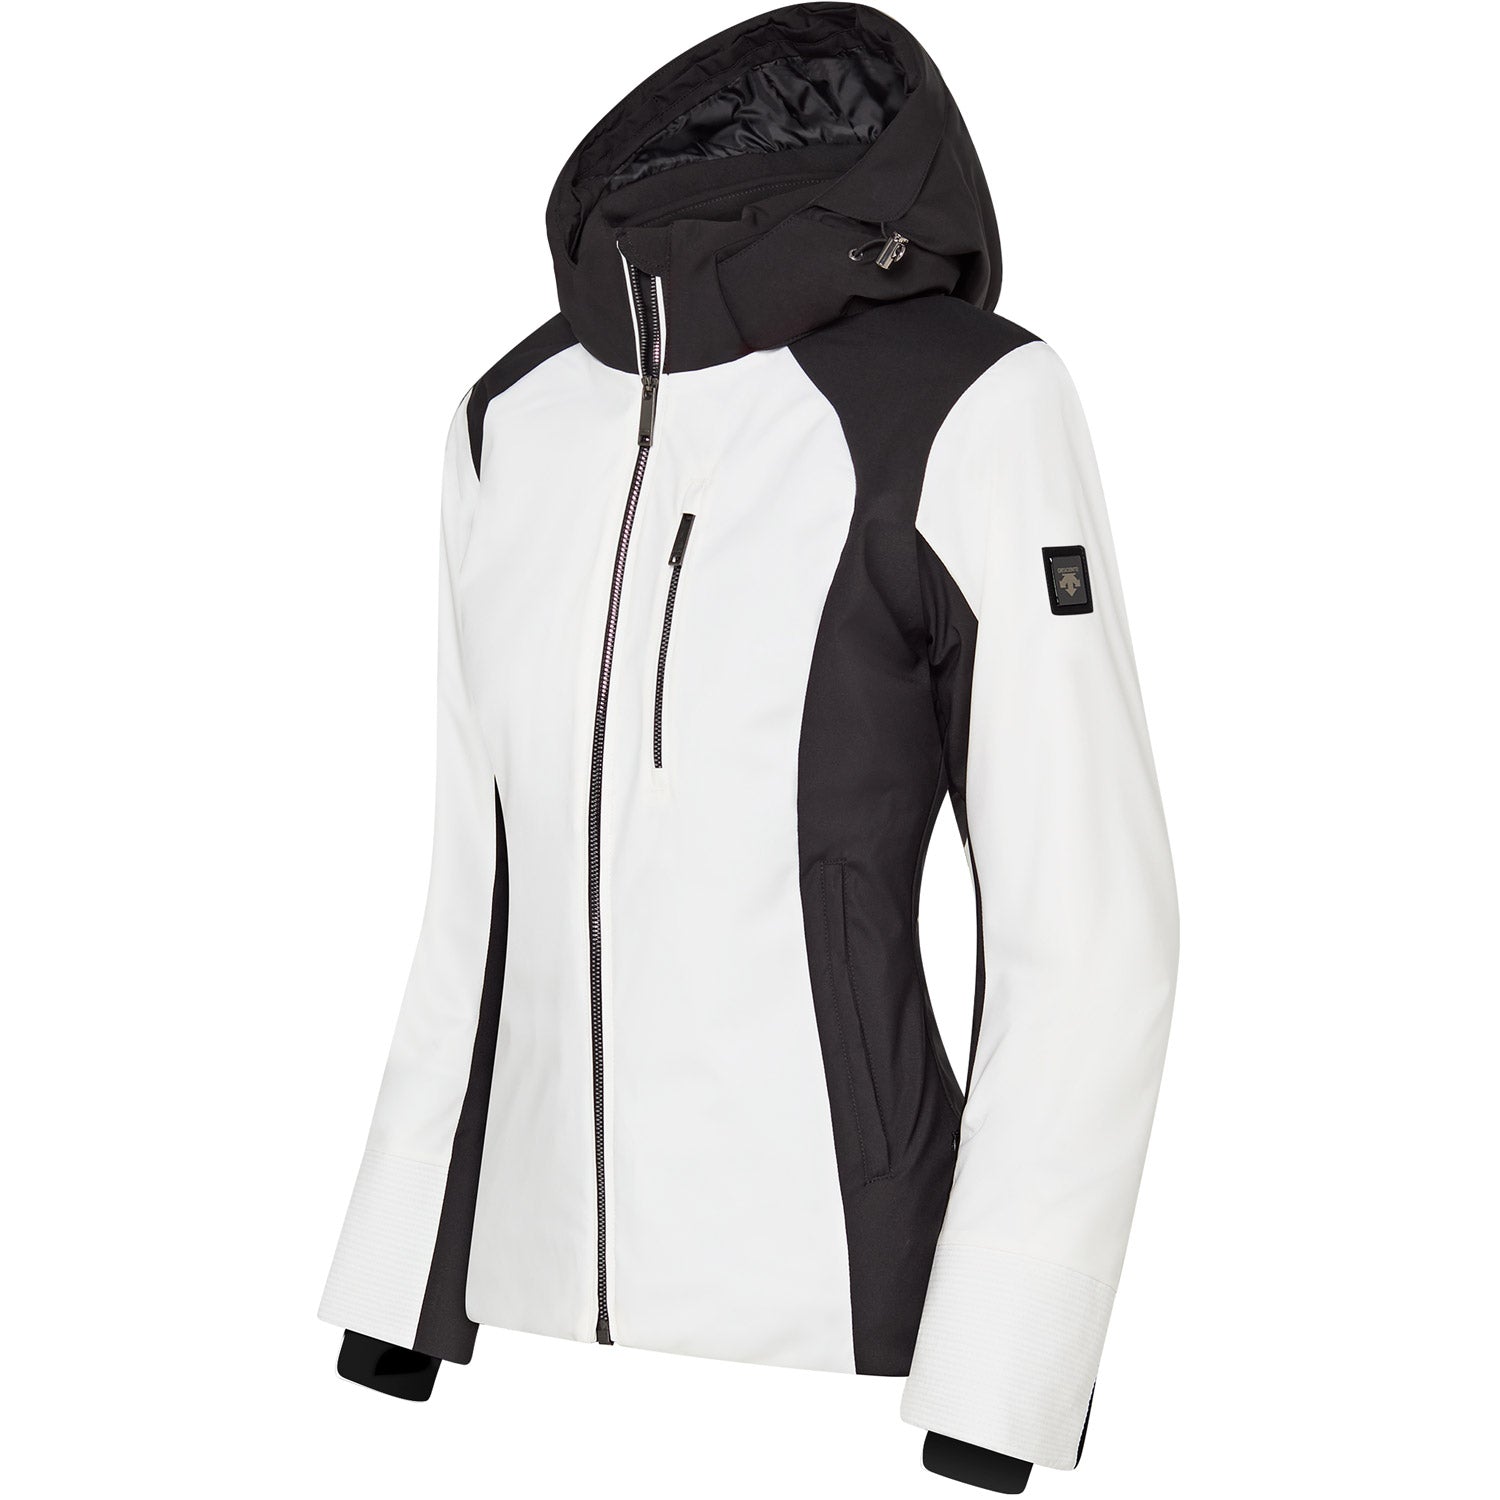 Piper Insulated Ski Jacket